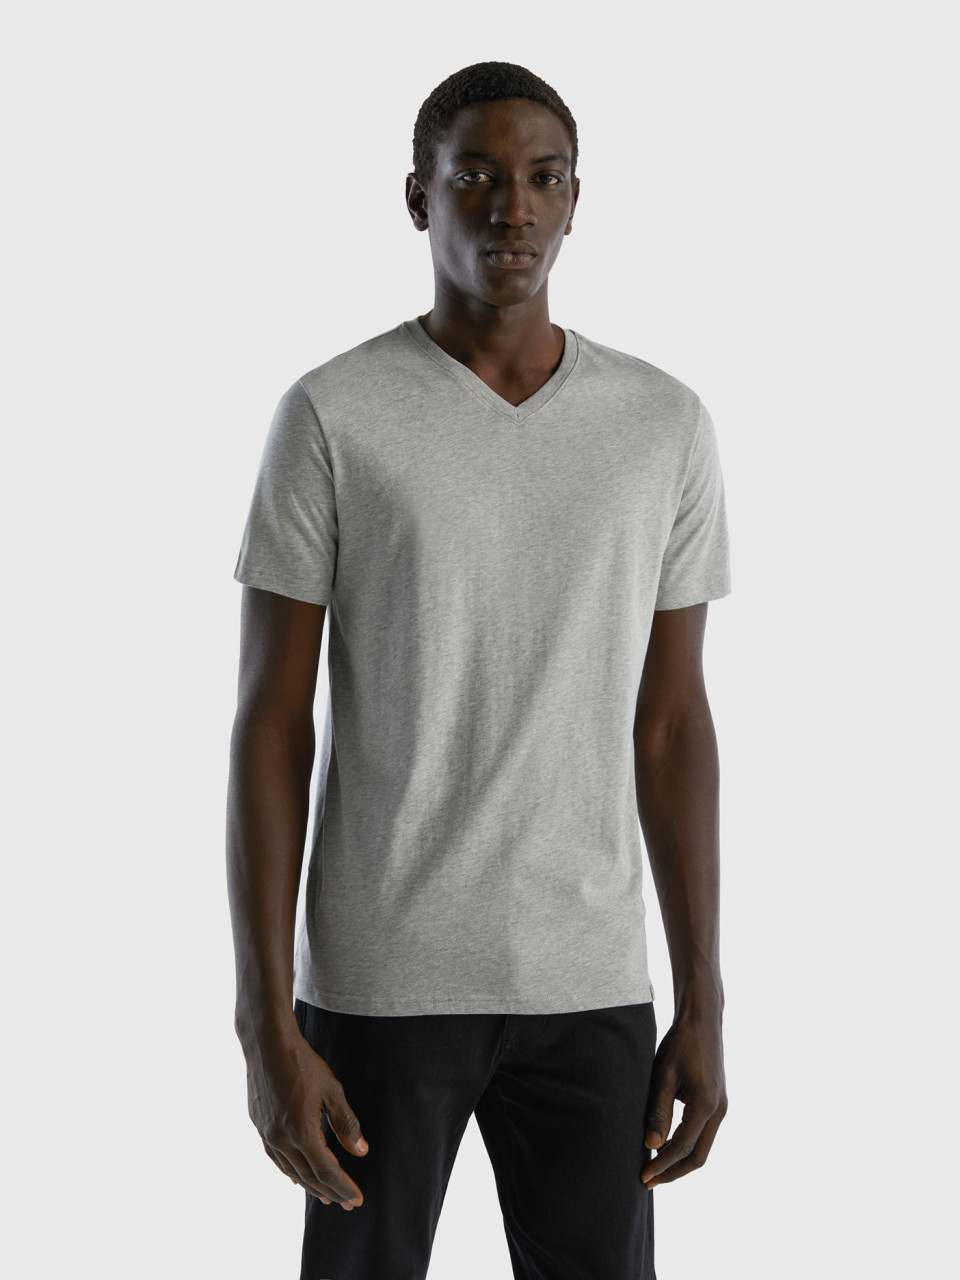 Benetton, T-shirt In Long Fiber Cotton, Light Gray, Men